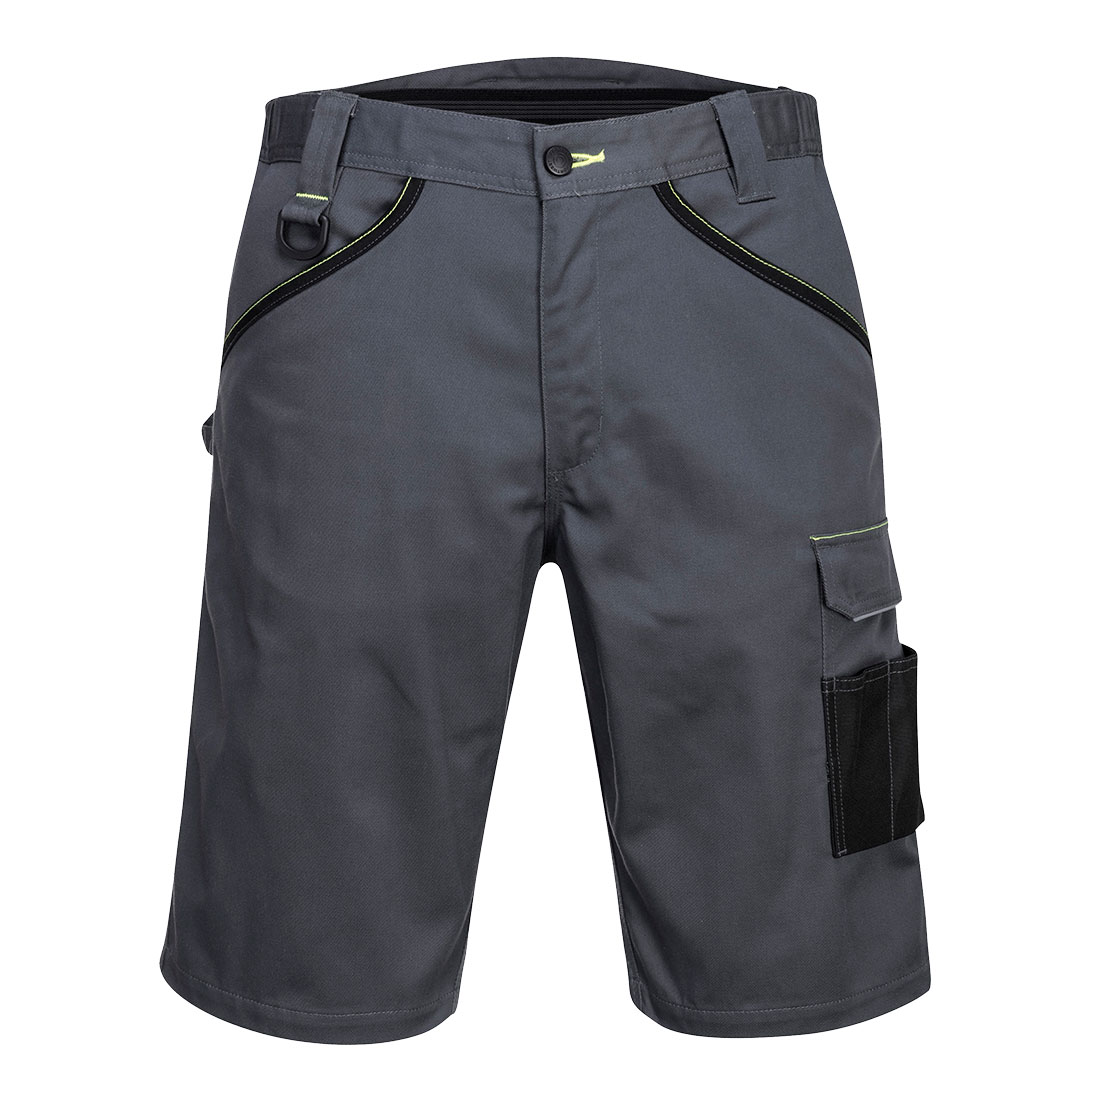 PW3 Work Shorts Velikost: 38, Barva: Zoom Grey/Black